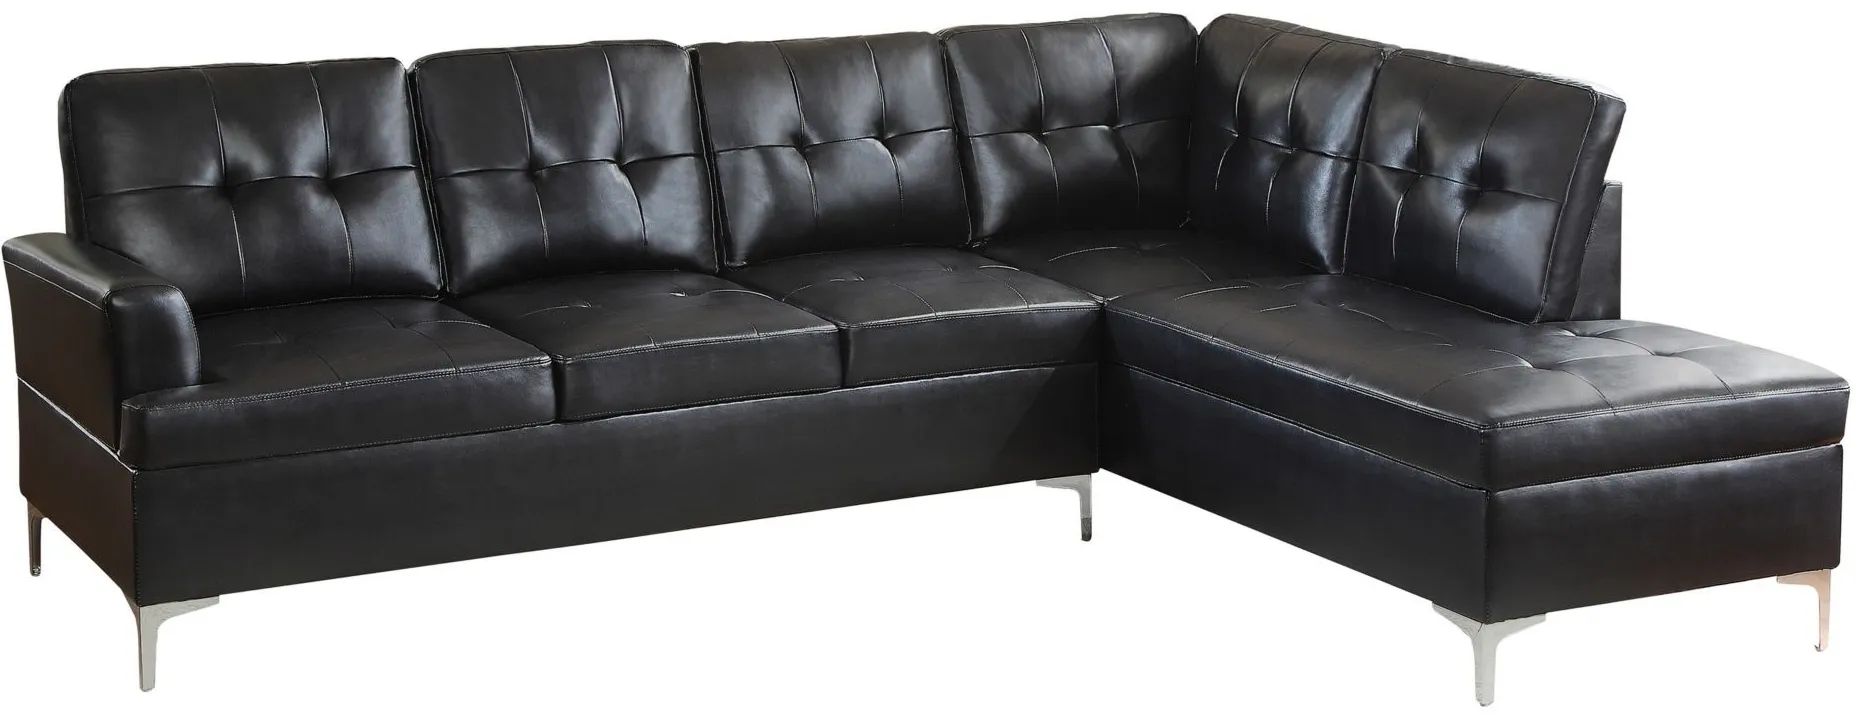 Cruz 2-pc. Sectional Sofa in Black by Homelegance